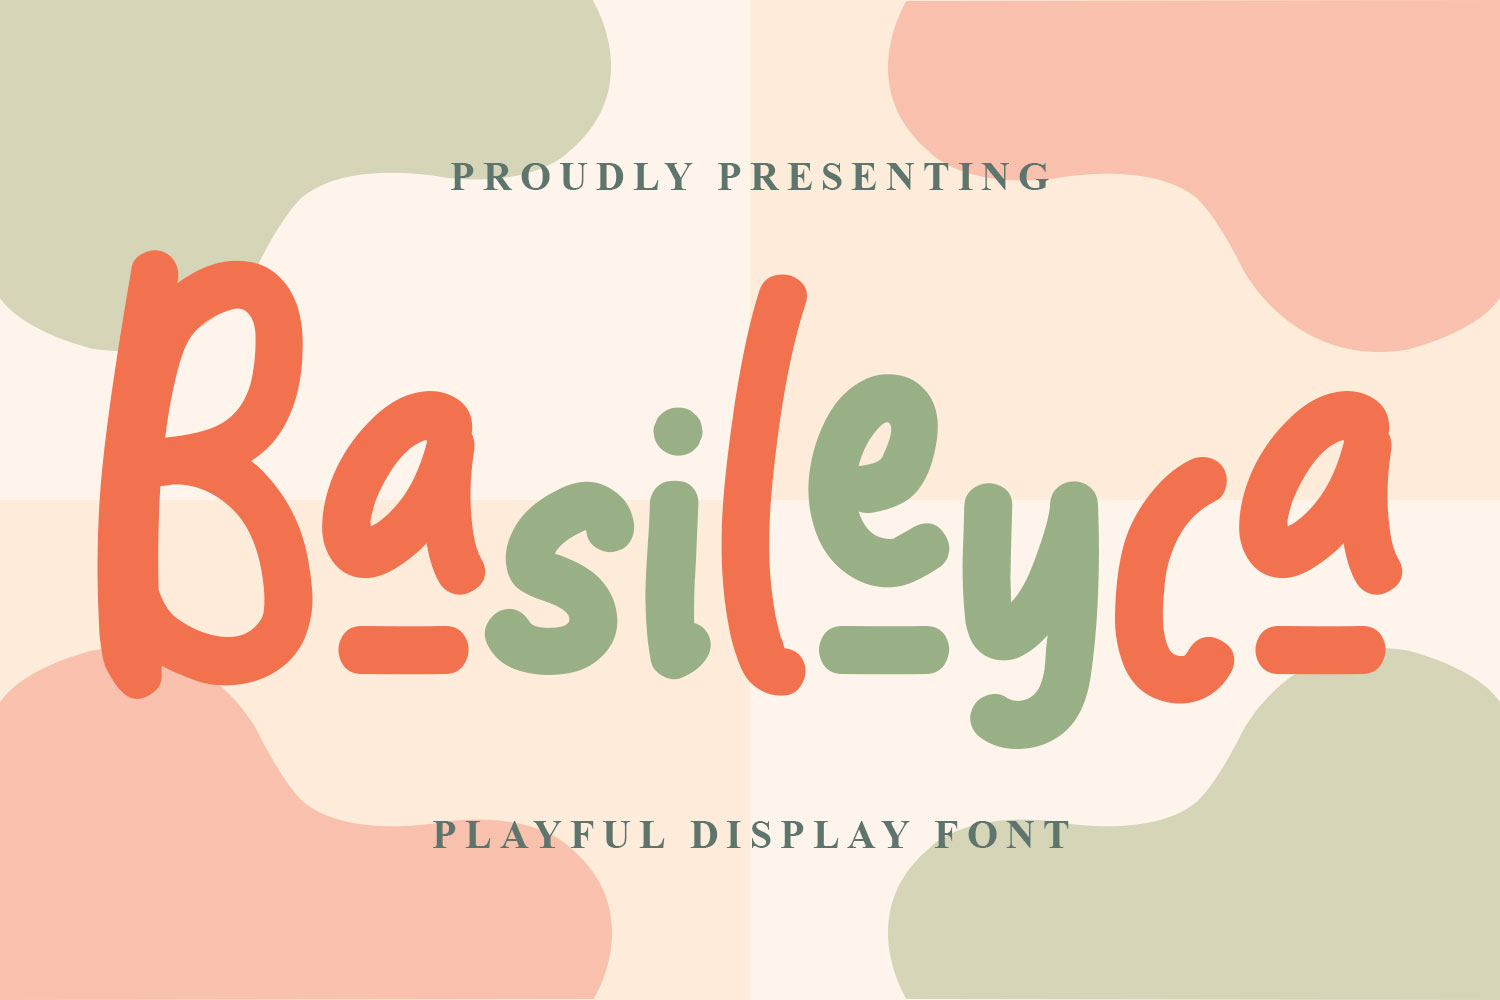 Basileyca Free Font